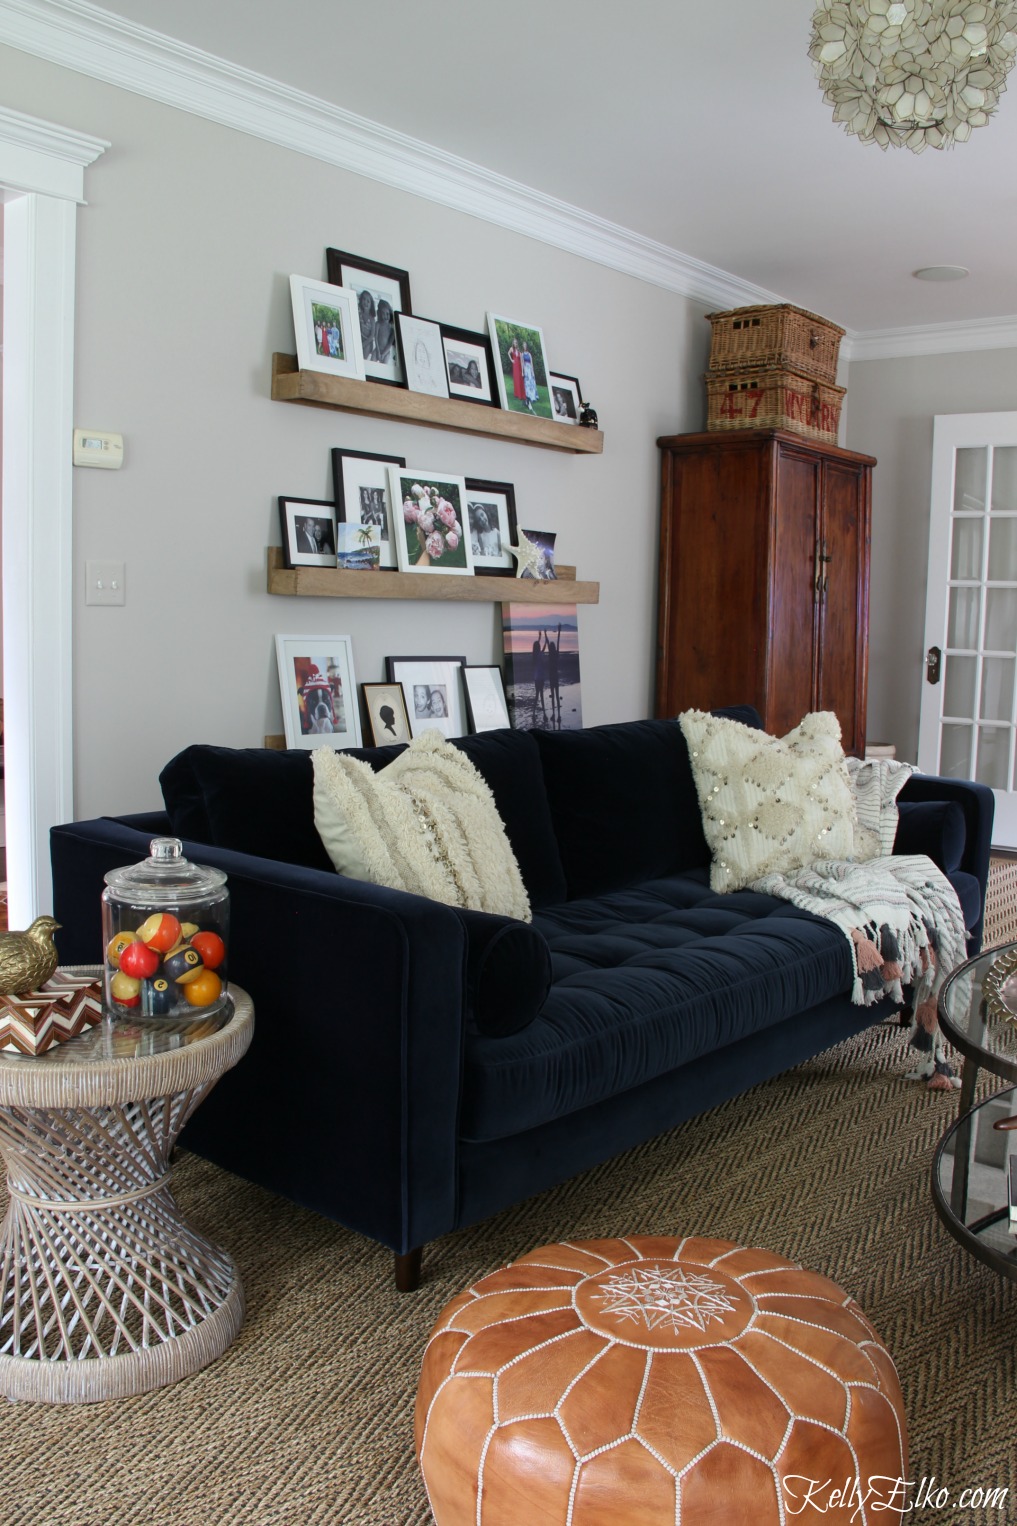 Sven Sofa Review one year later and a Sven sofa giveaway! kellyelko.com #svensofa #article #sofas #furniture #livingroom #giveaway